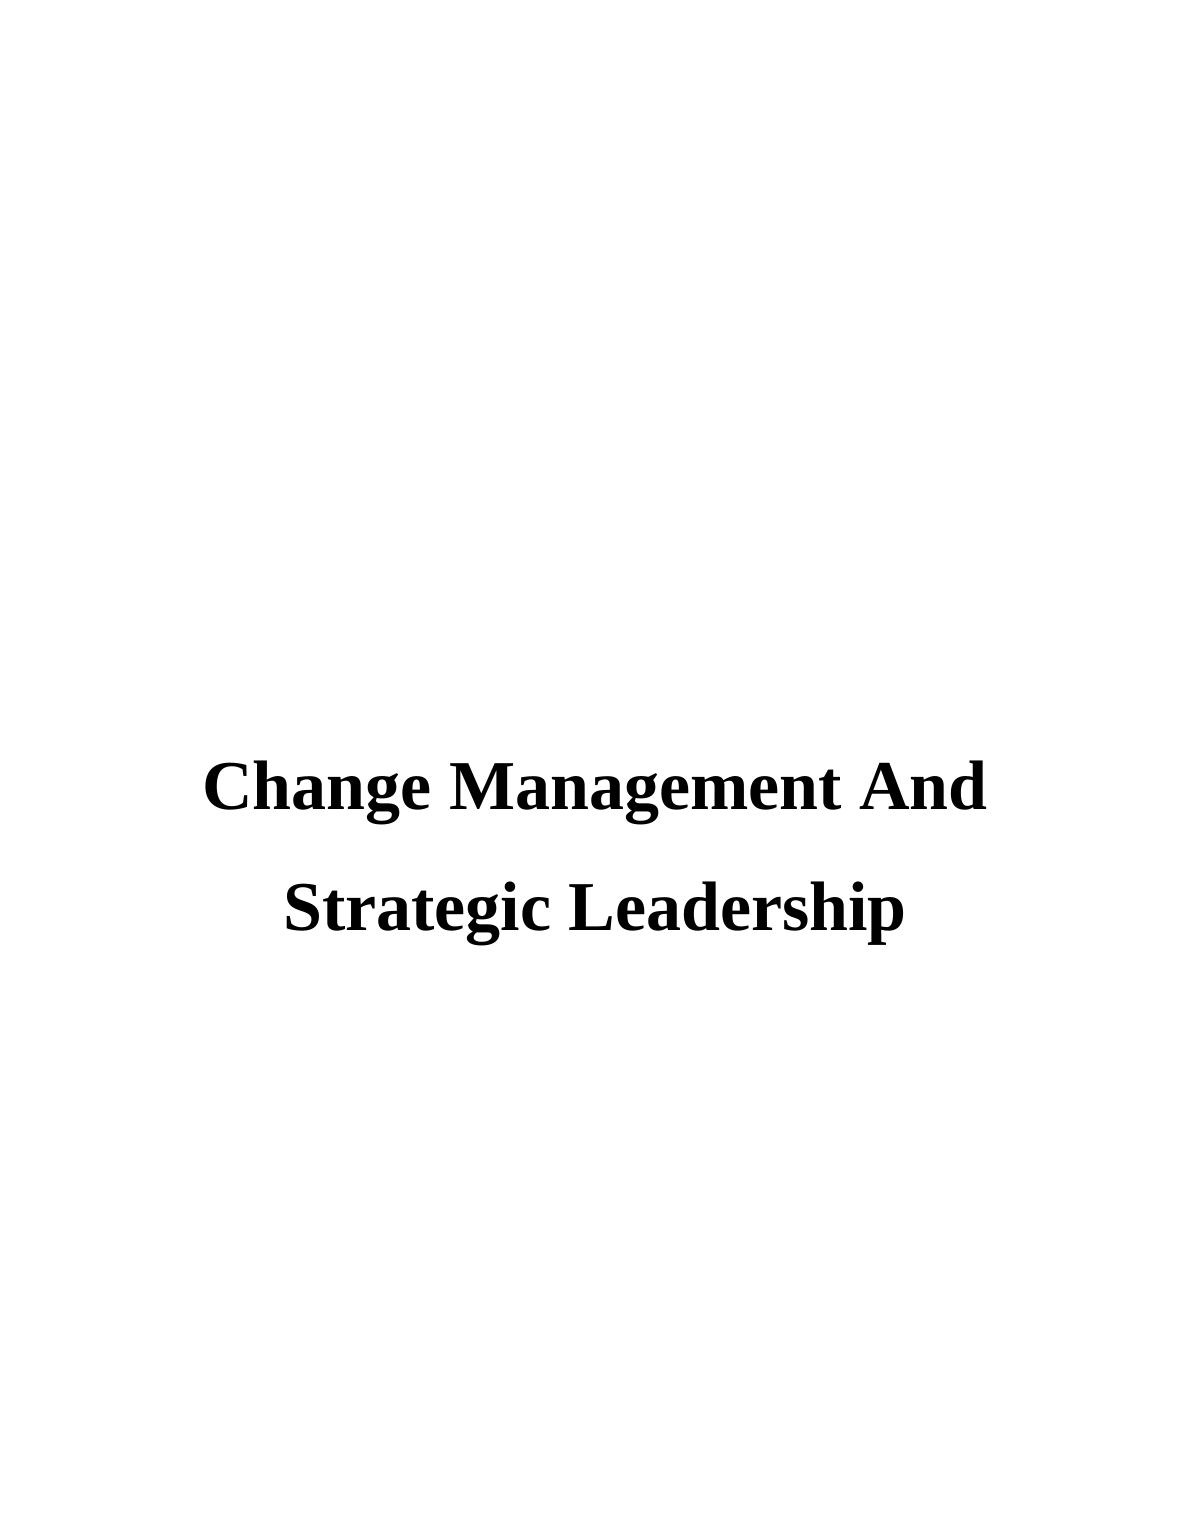 Strategic Leadership and Change Management in Enterprise_1